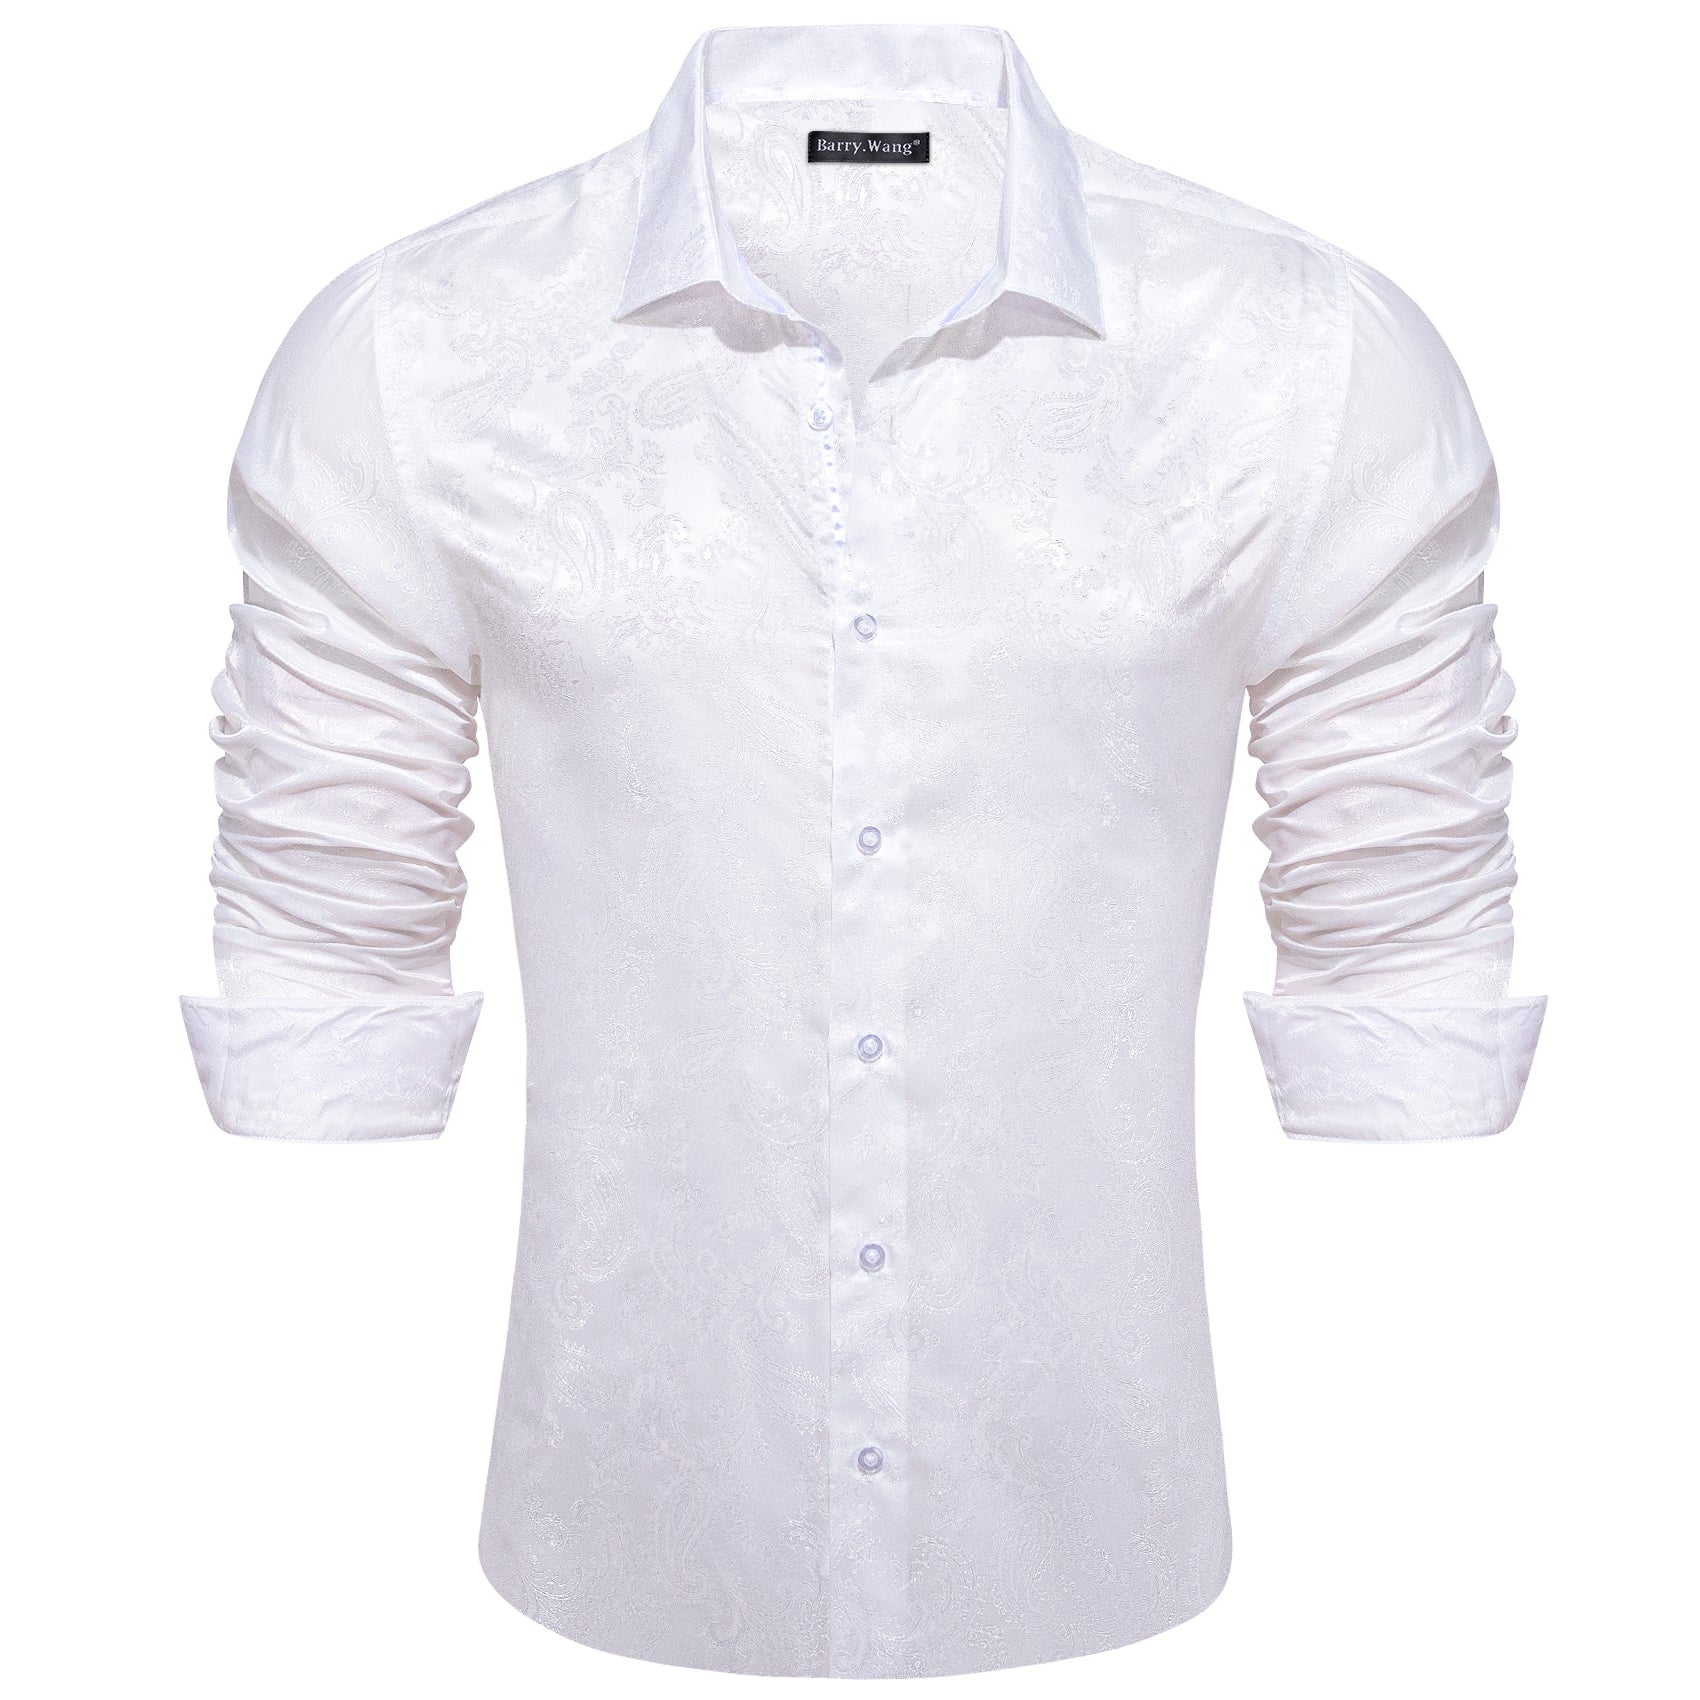 Barry.wang White Paisley Silk Men's Shirt